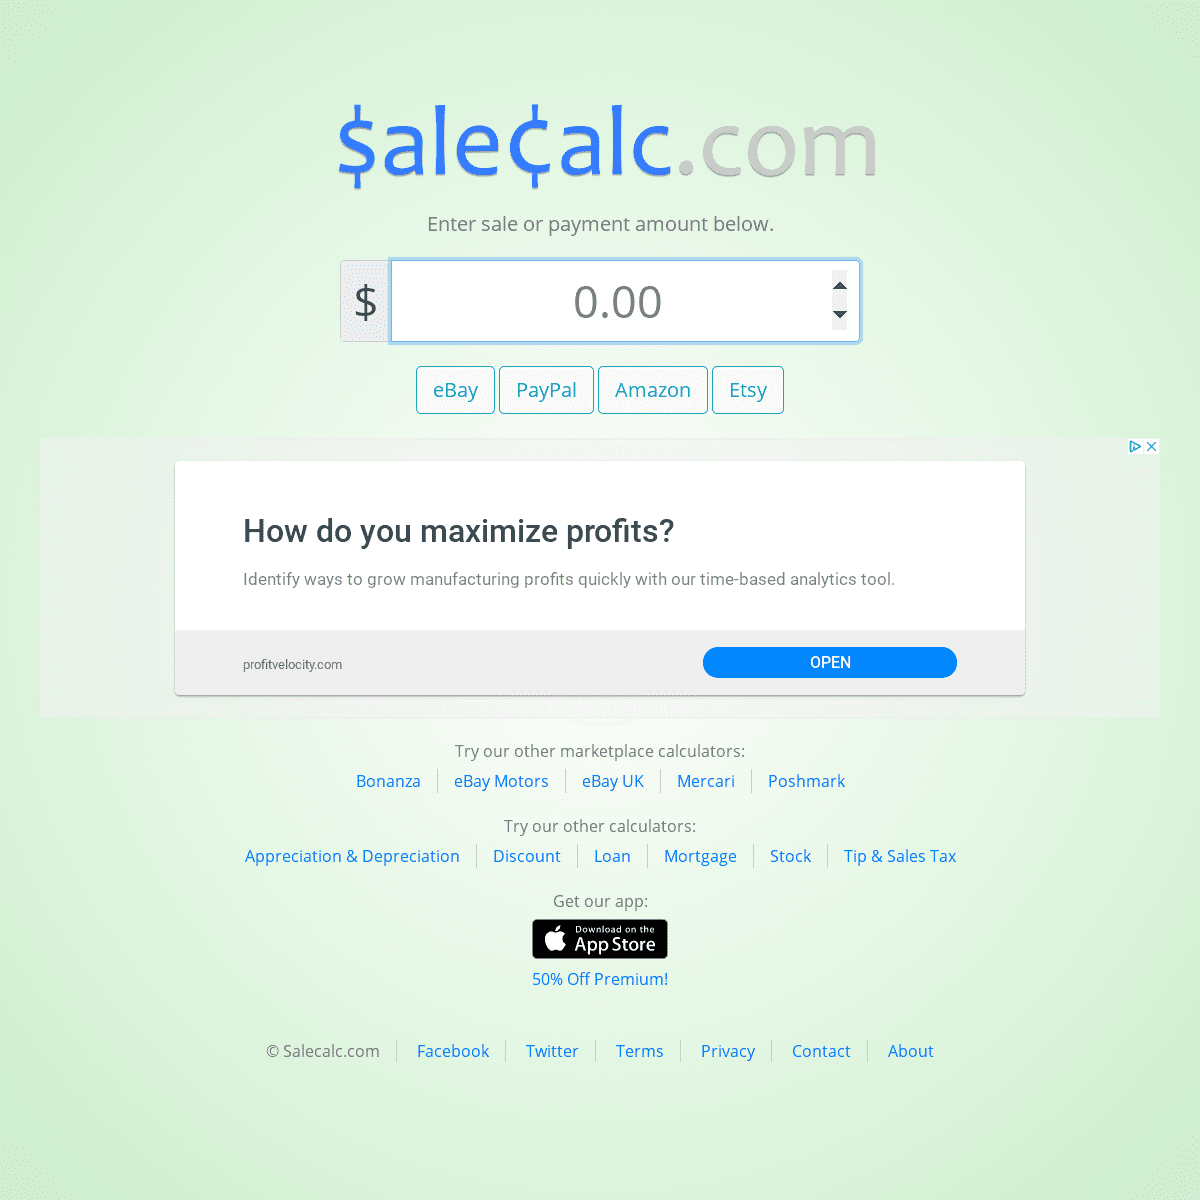 A complete backup of salecalc.com